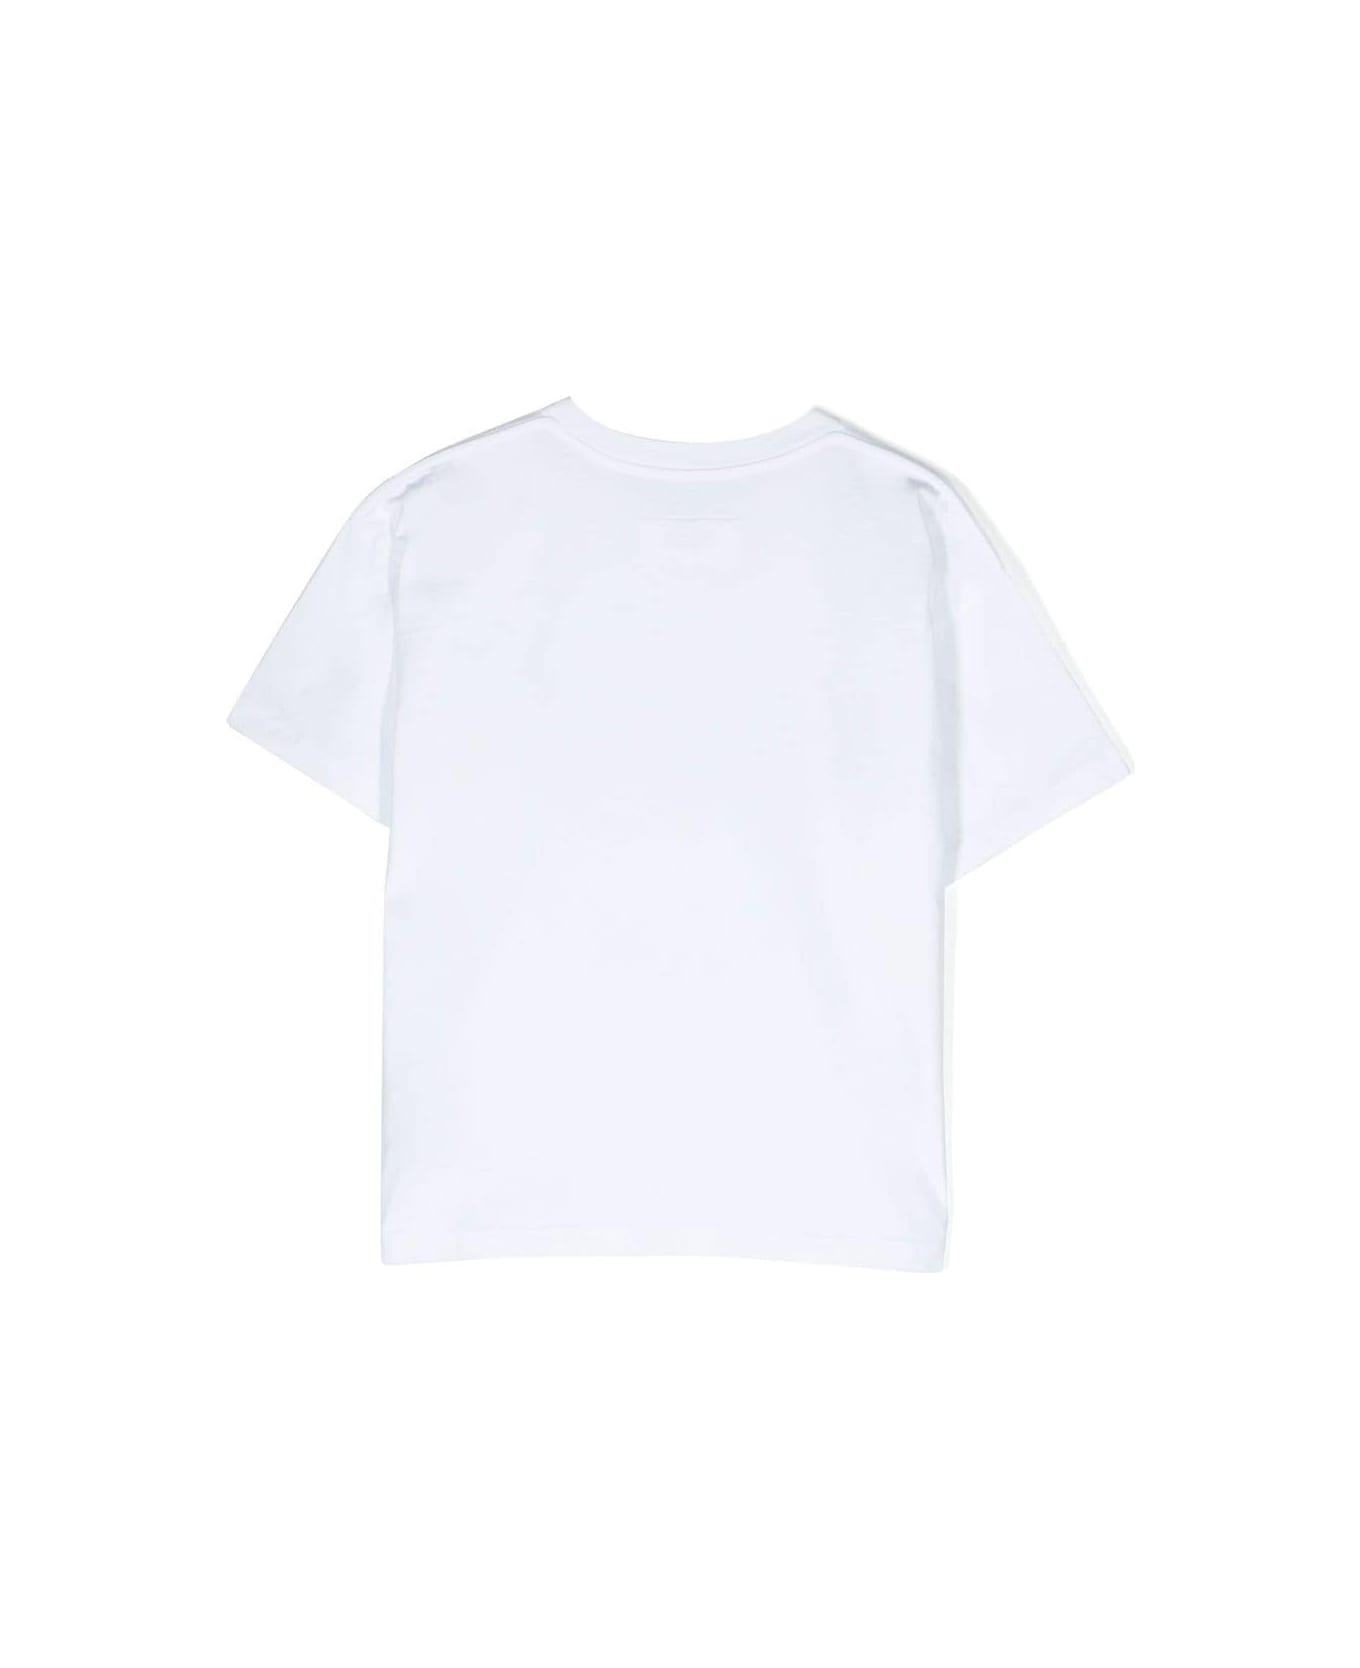 MM6 Maison Margiela Printed T-shirt - White